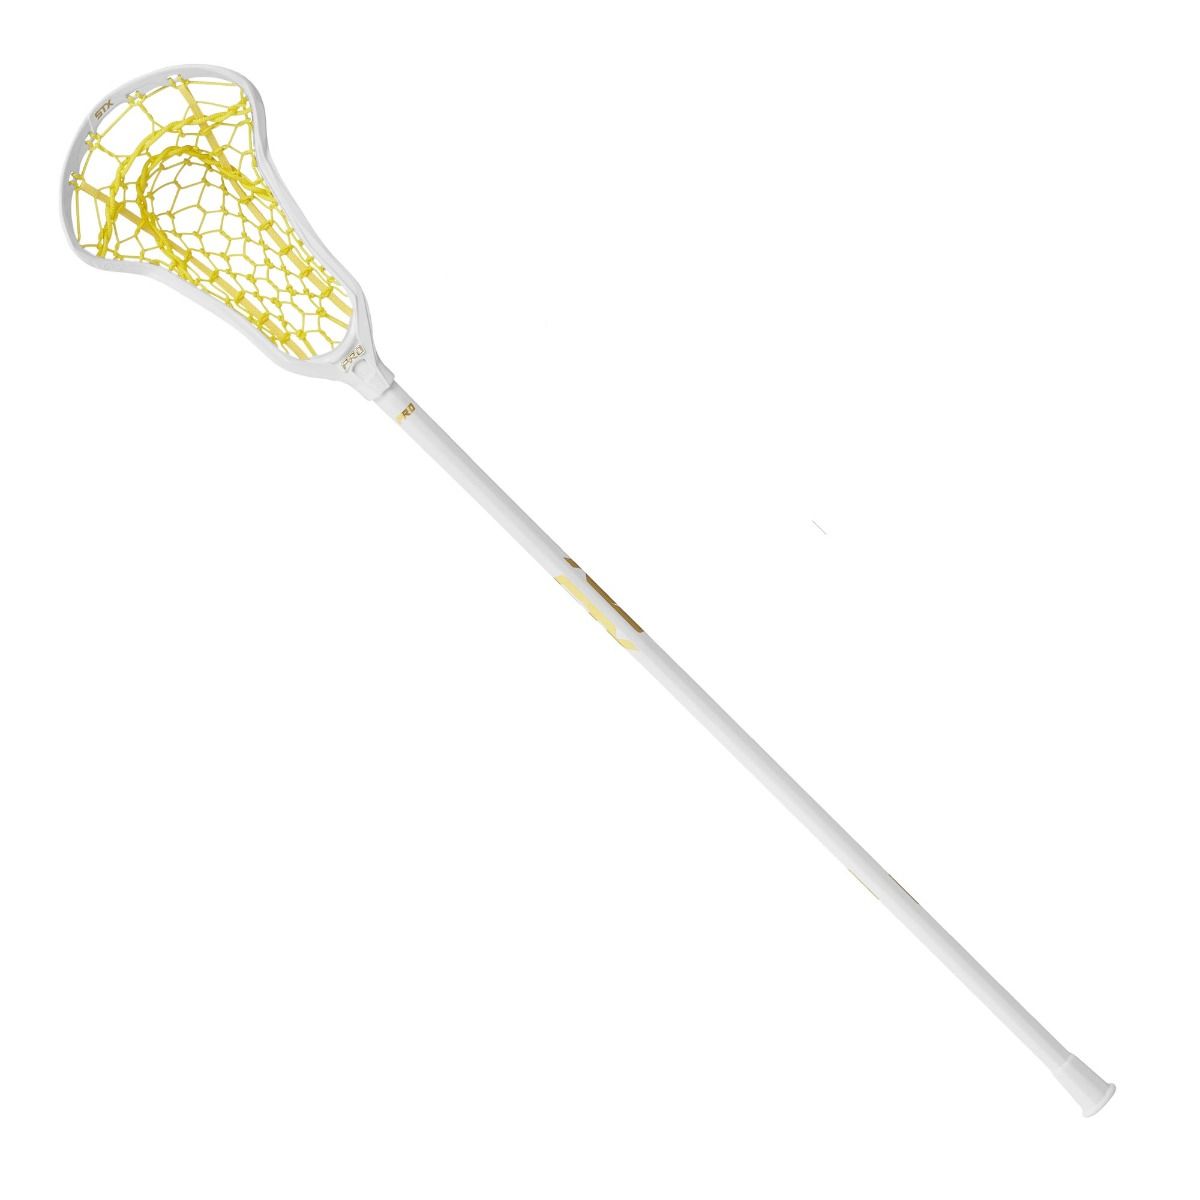 Gait Apex Women's Lacrosse Head White and Yellow / Flex Mesh Pocket